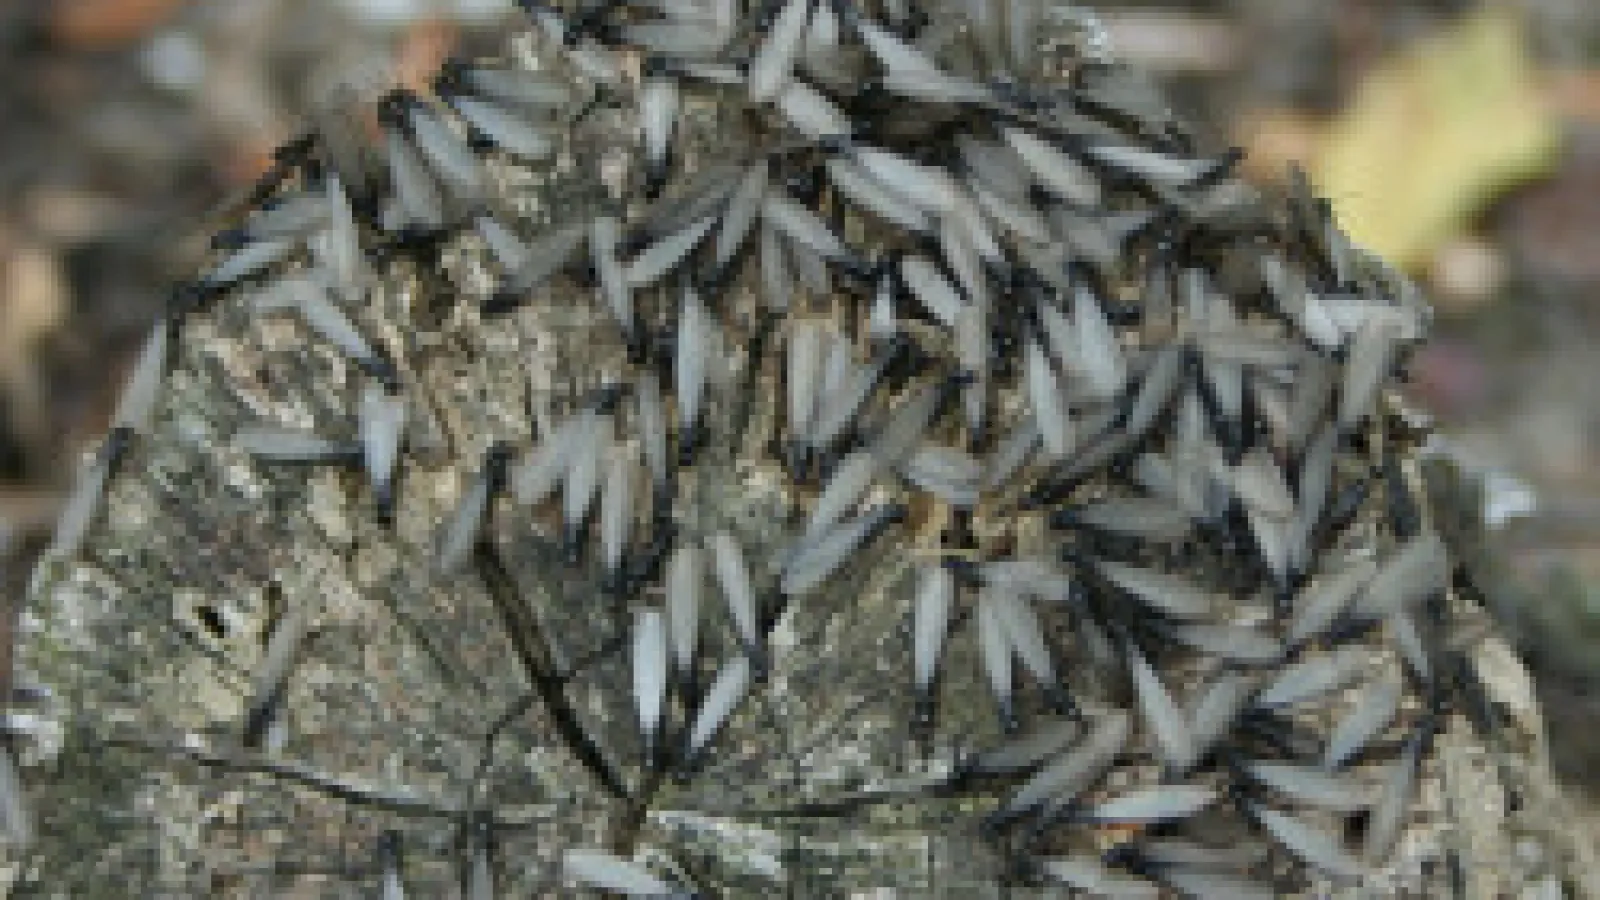 a termite swarm on a tree